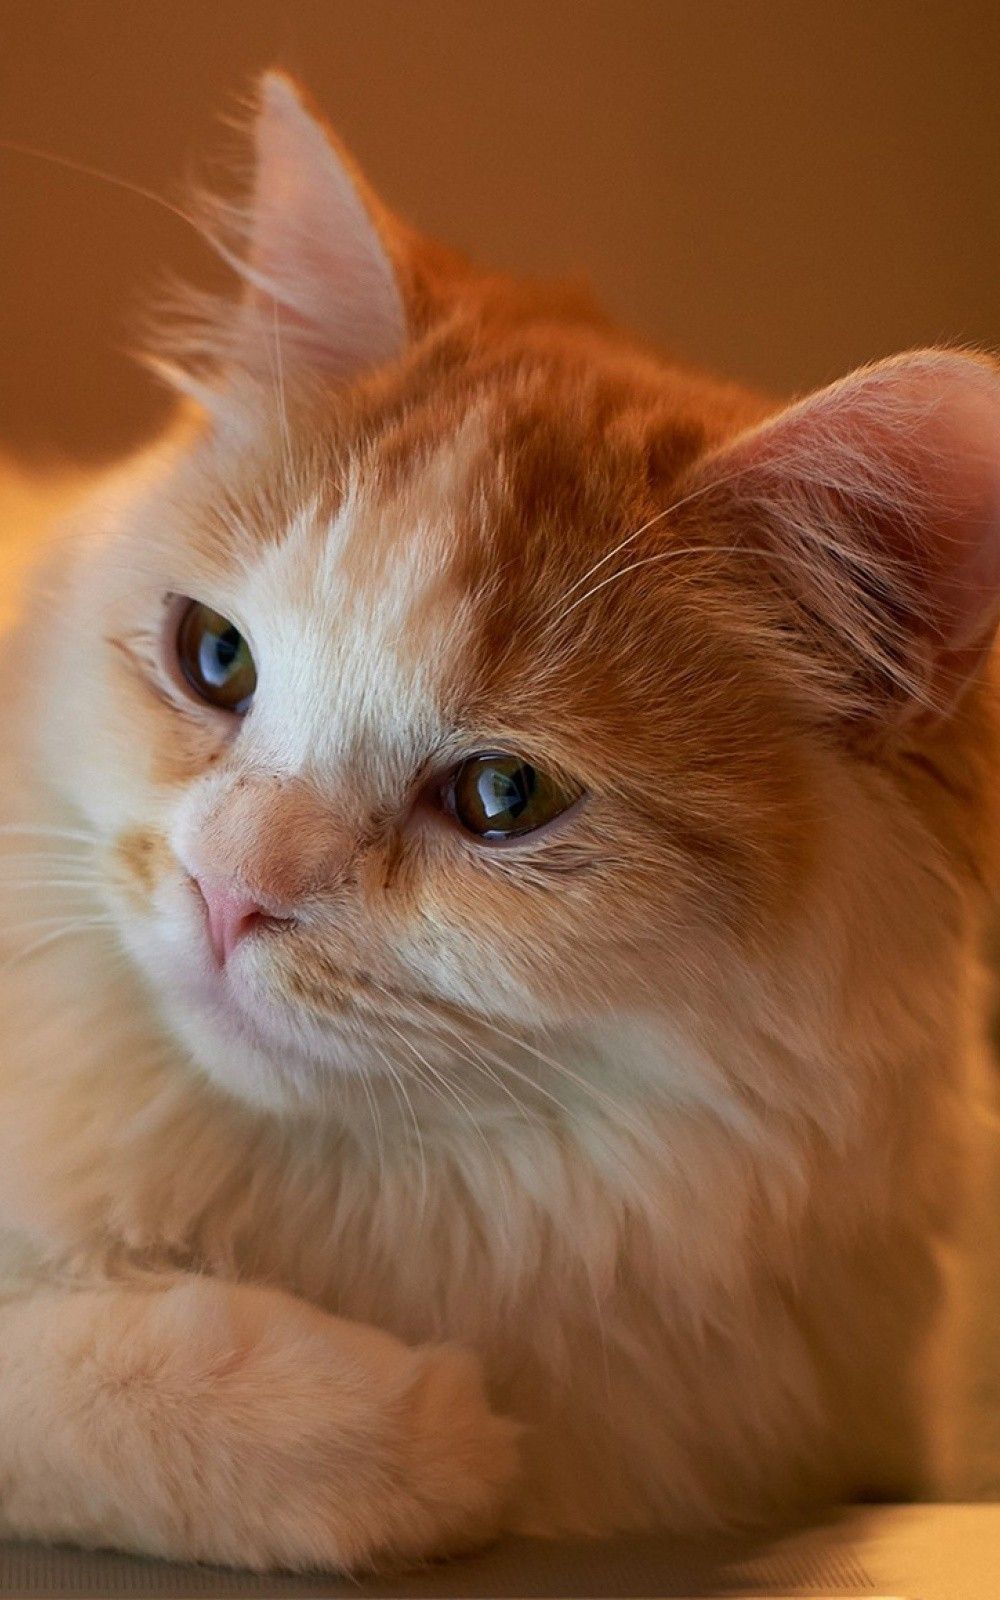  Wallpaper گربه نرم نارنجی با چشم های قهوه‌ای